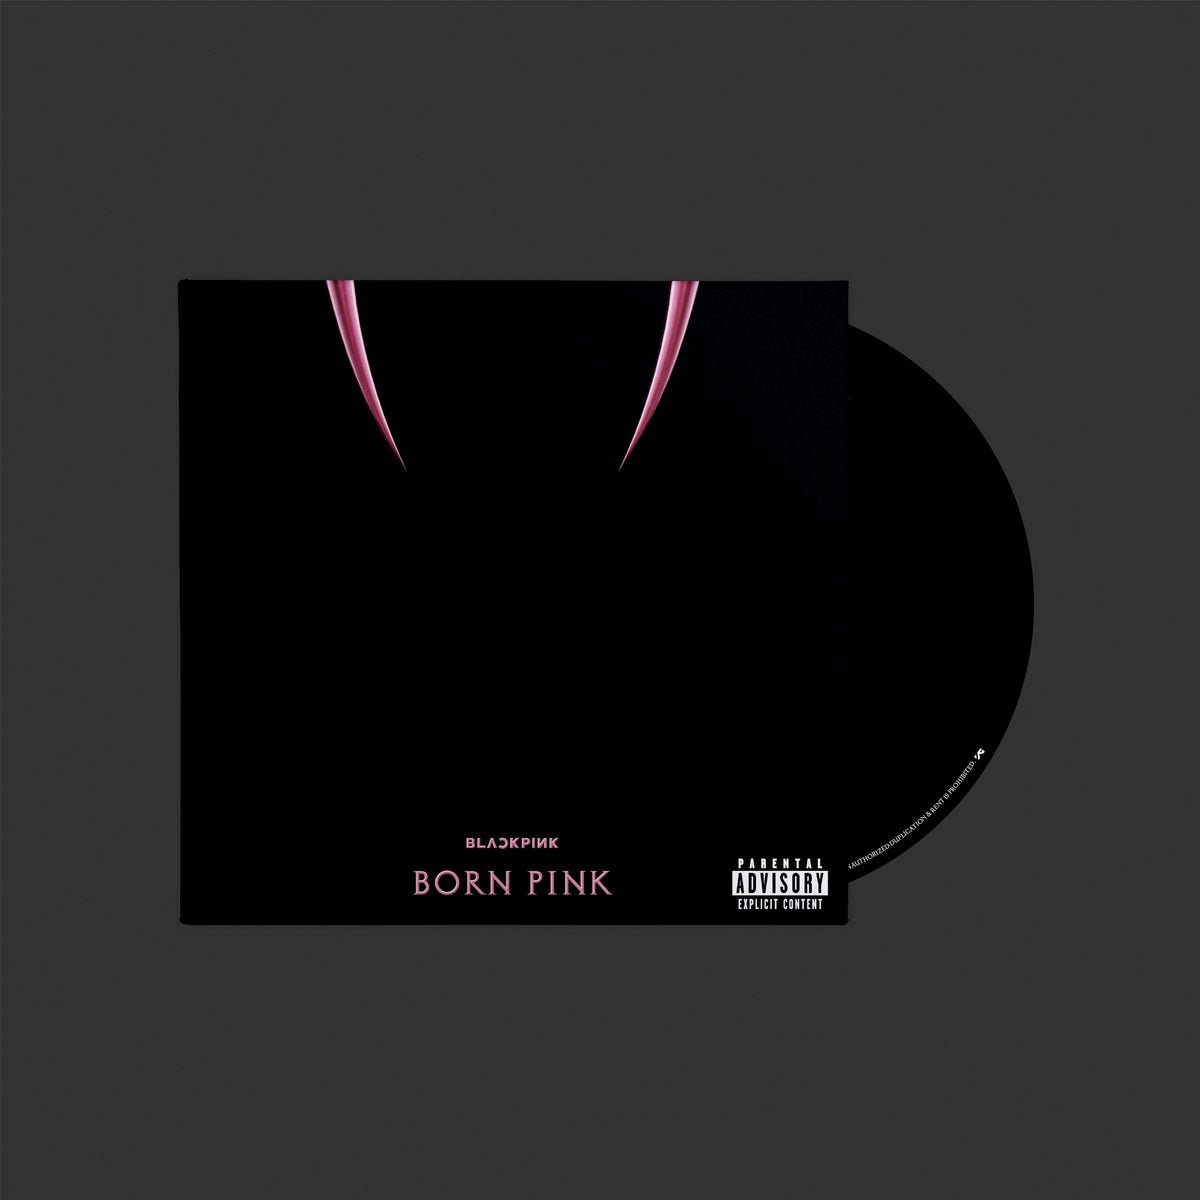 Борн Пинк альбом. Born Pink BLACKPINK альбом. CD стандарт. Альбом к поп Борн Пинк.